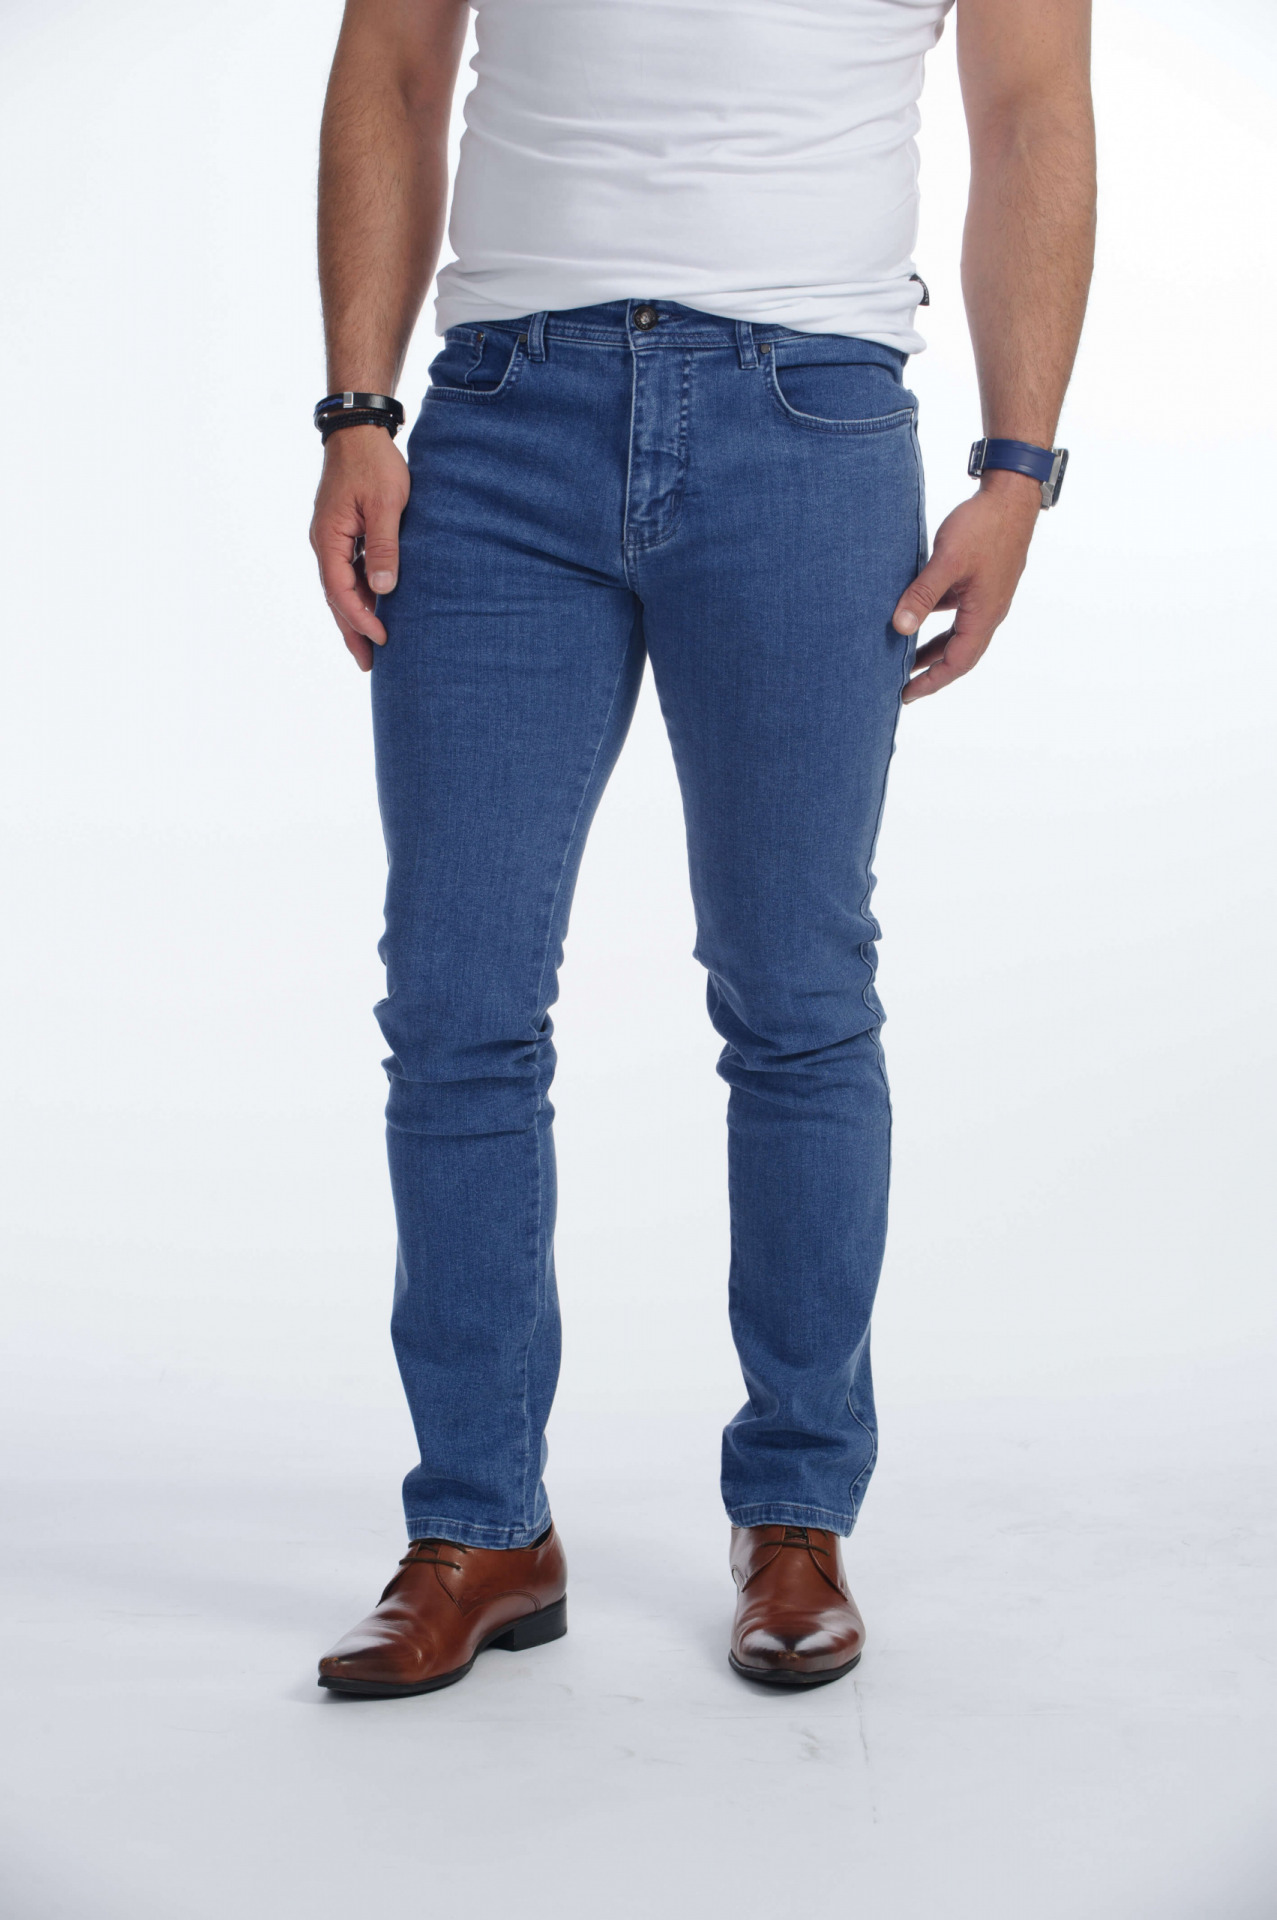 How to crease skinny jeans men – Star Denim